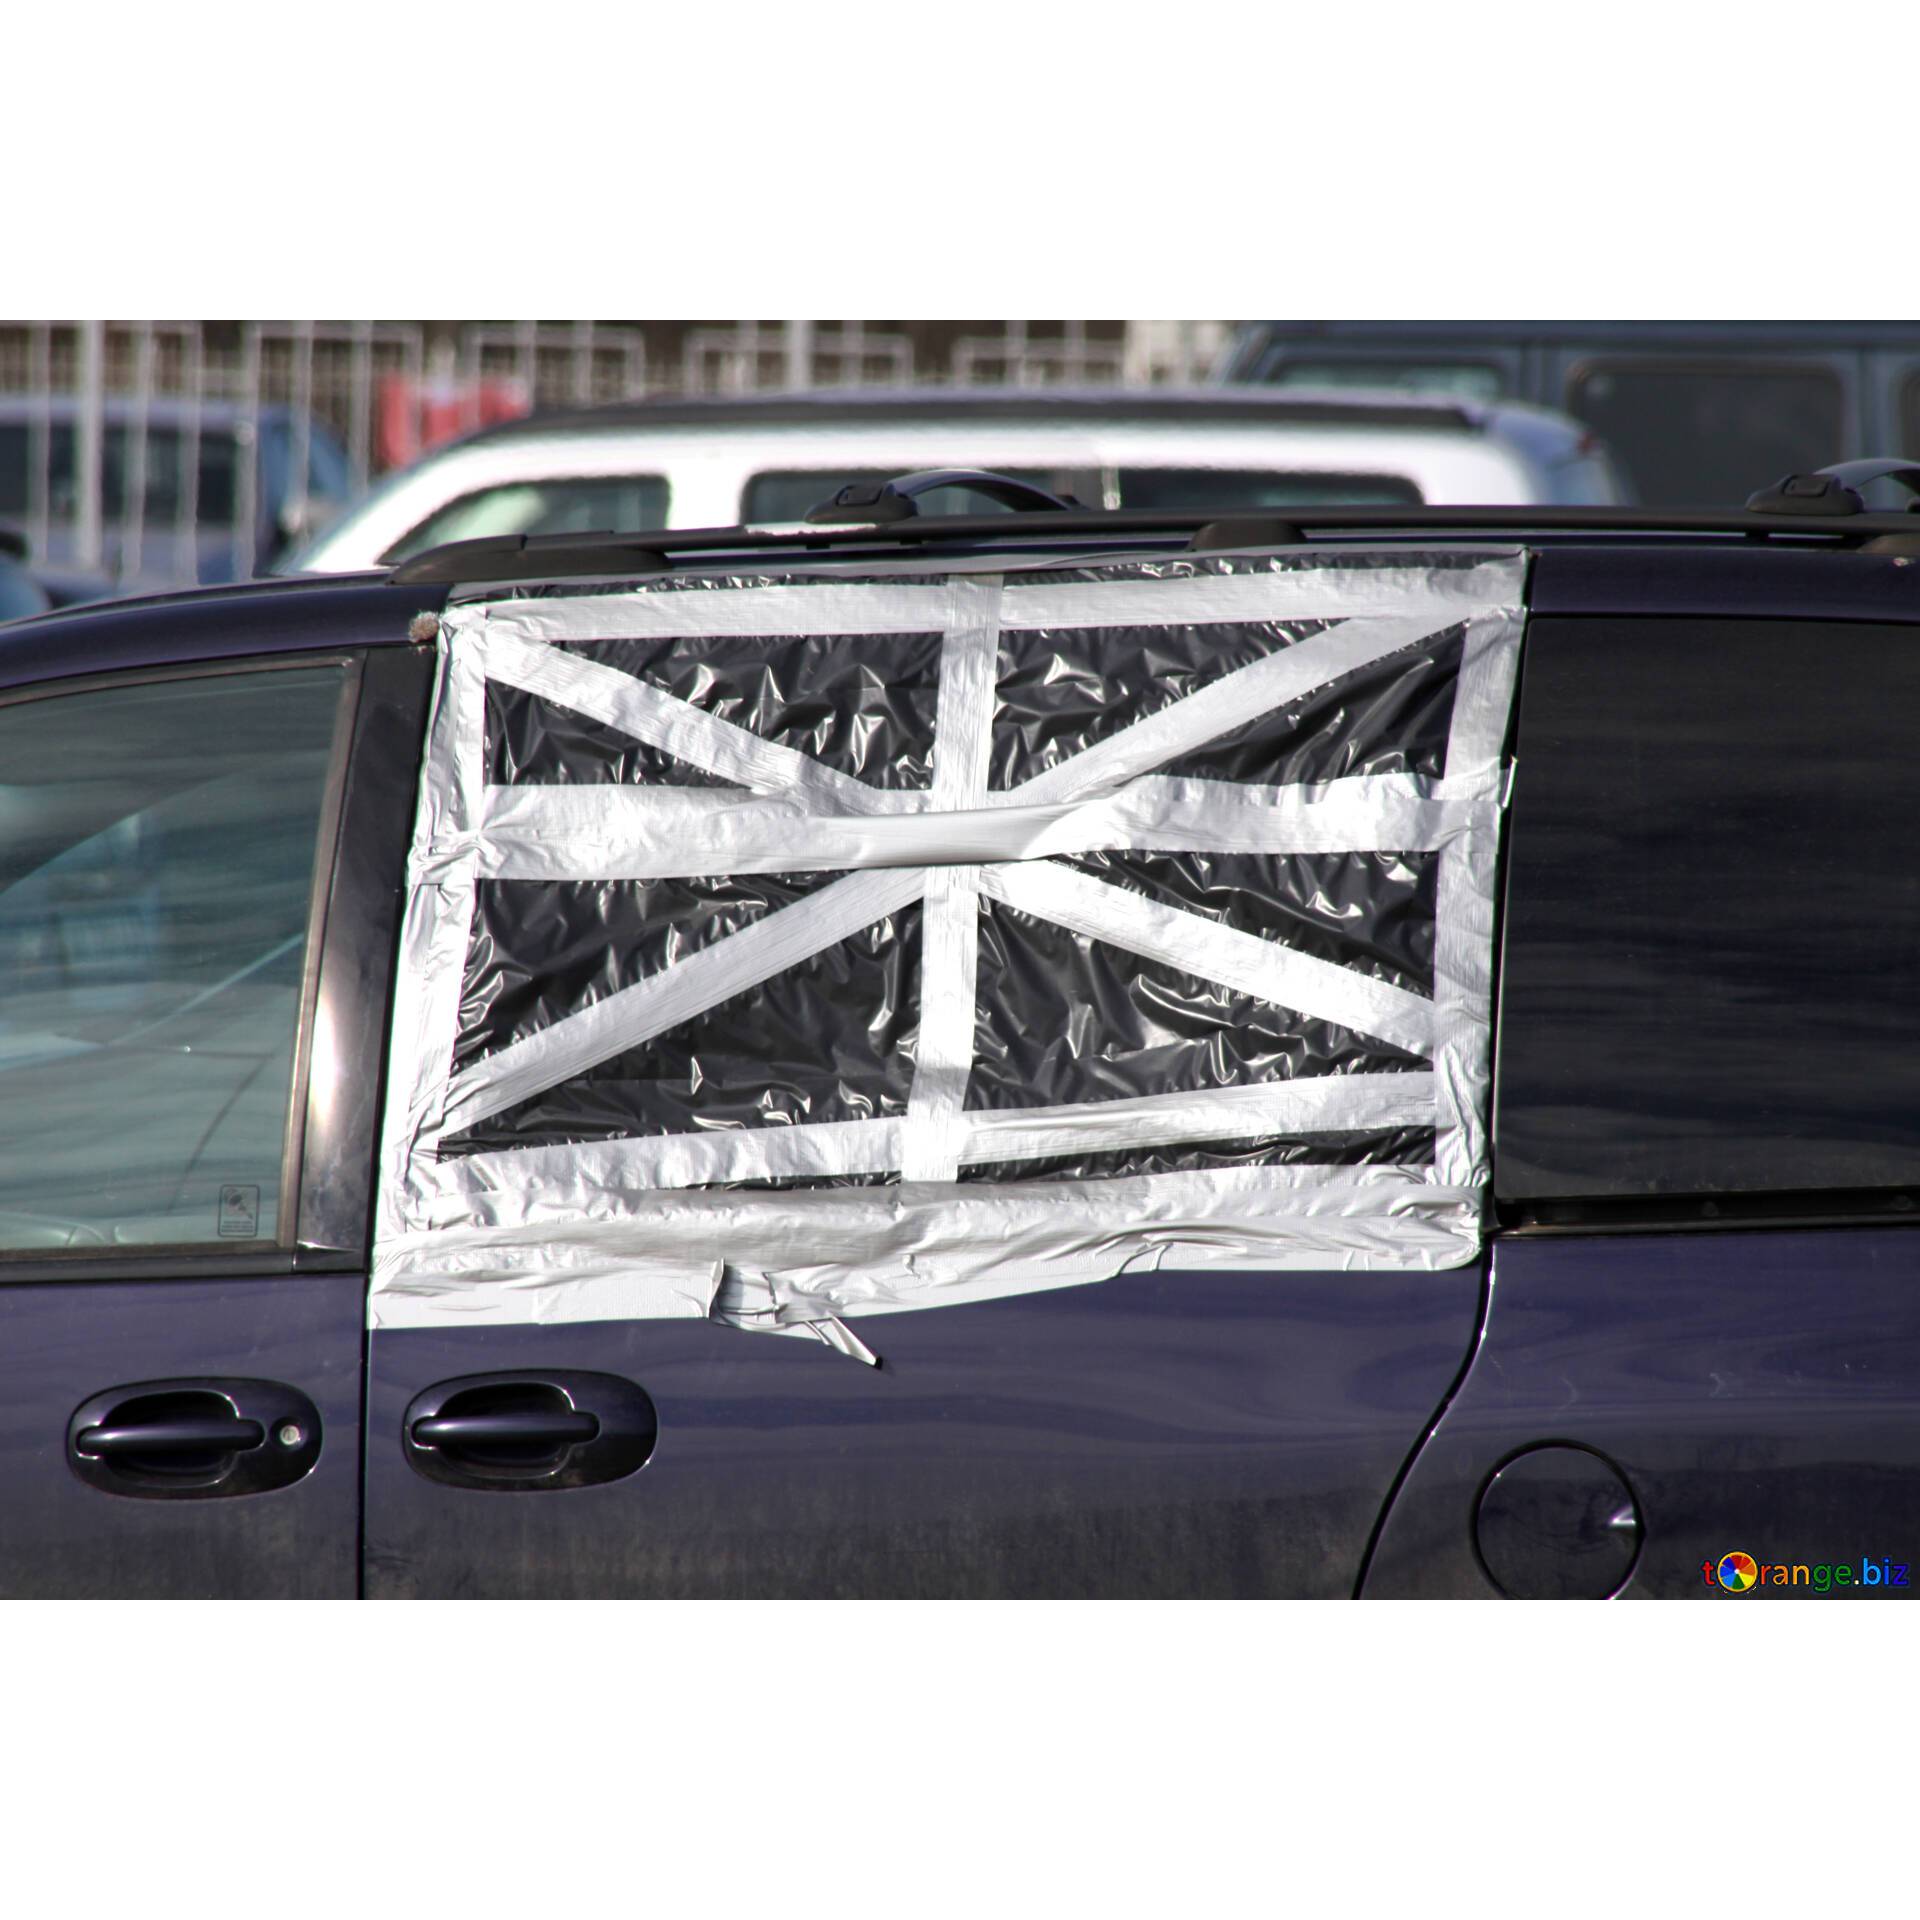 motorsports stickers cars car broken window 891